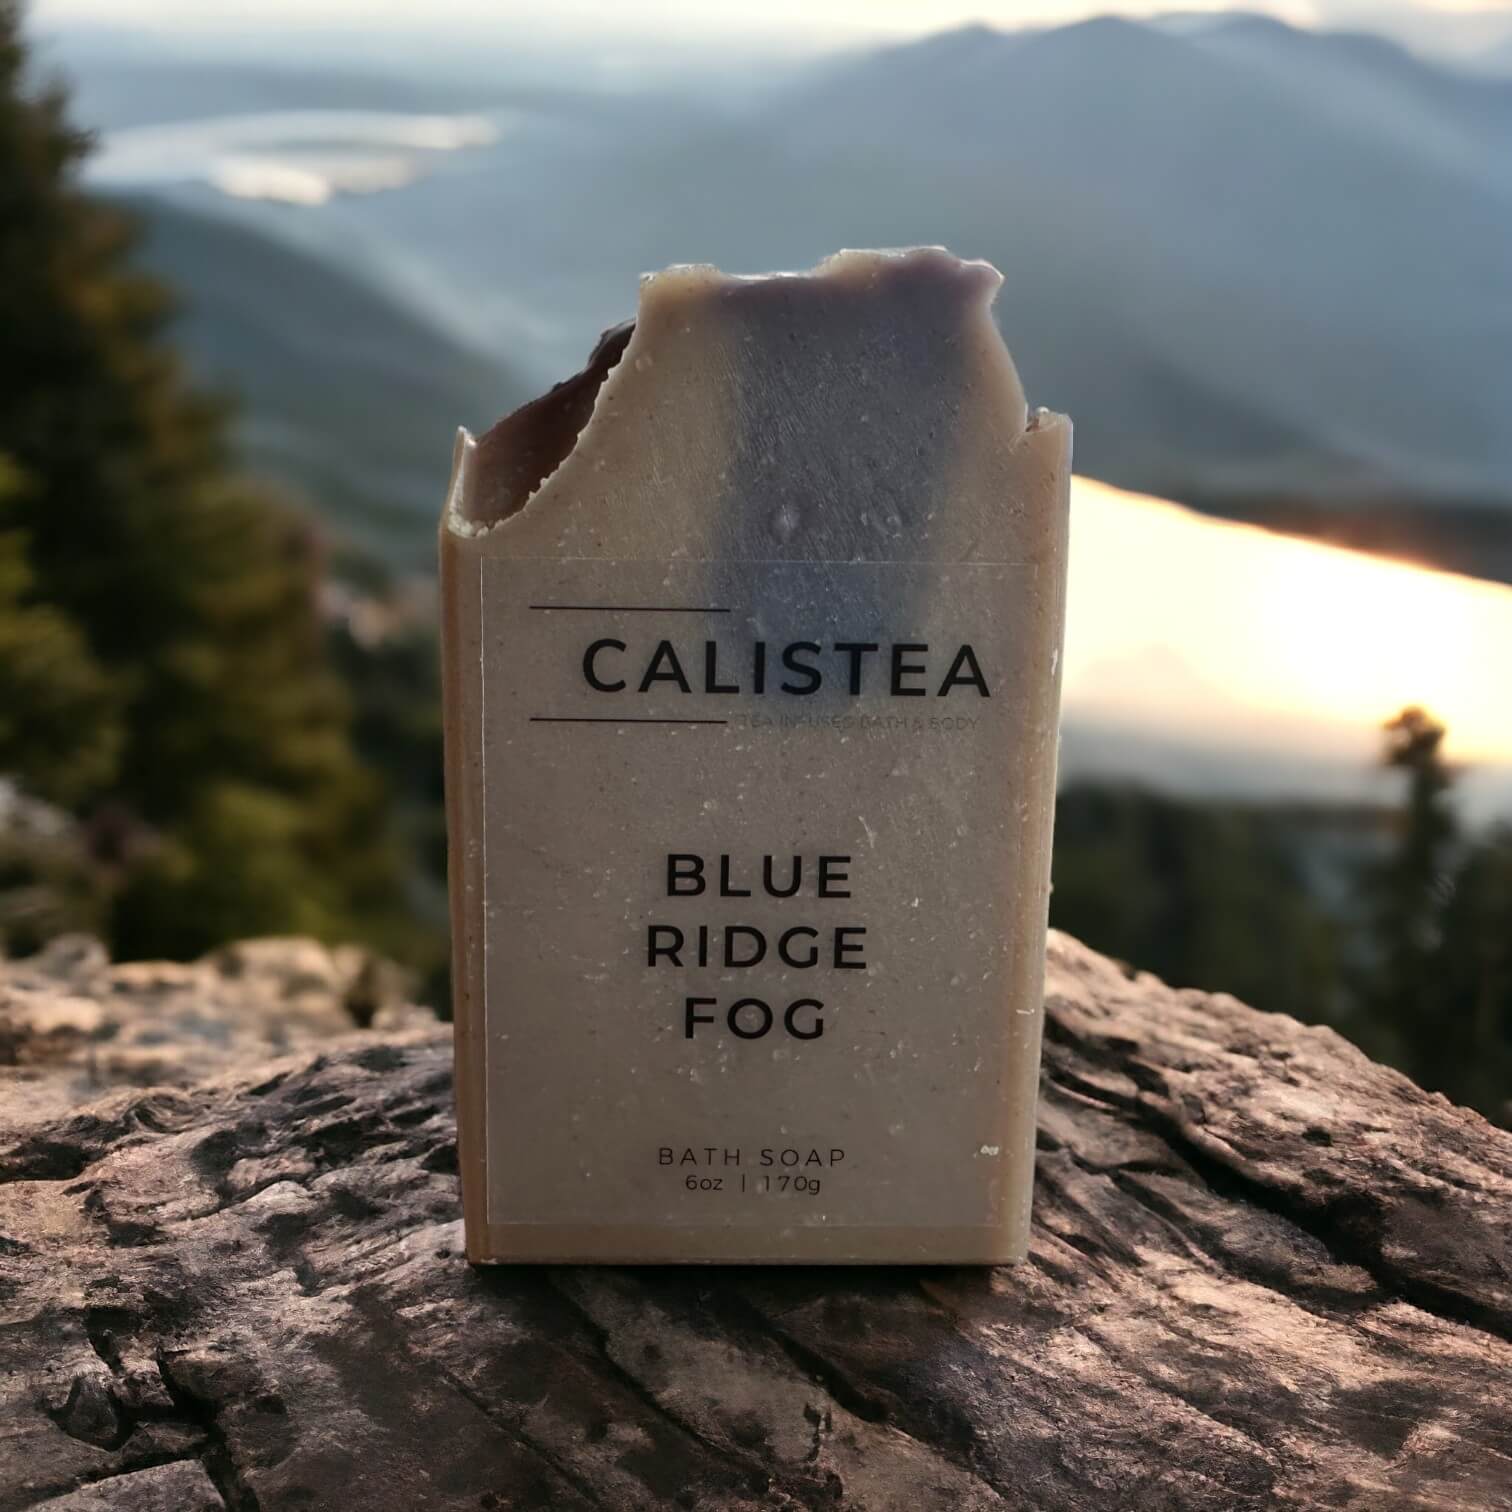 Blue Ridge Fog - Calistea